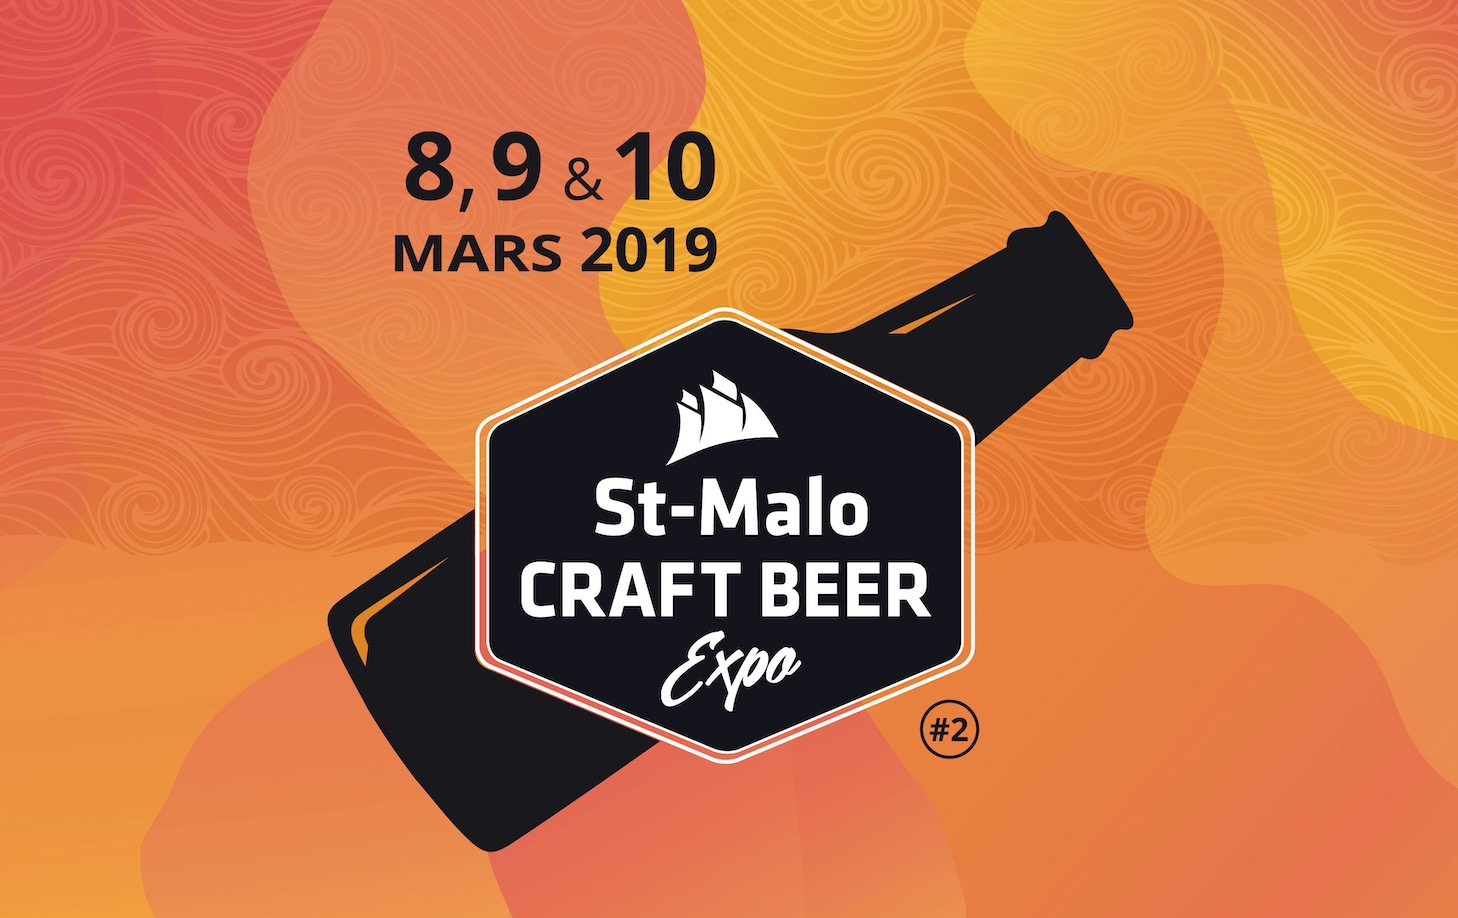 Saint-Malo beer craf expo logo